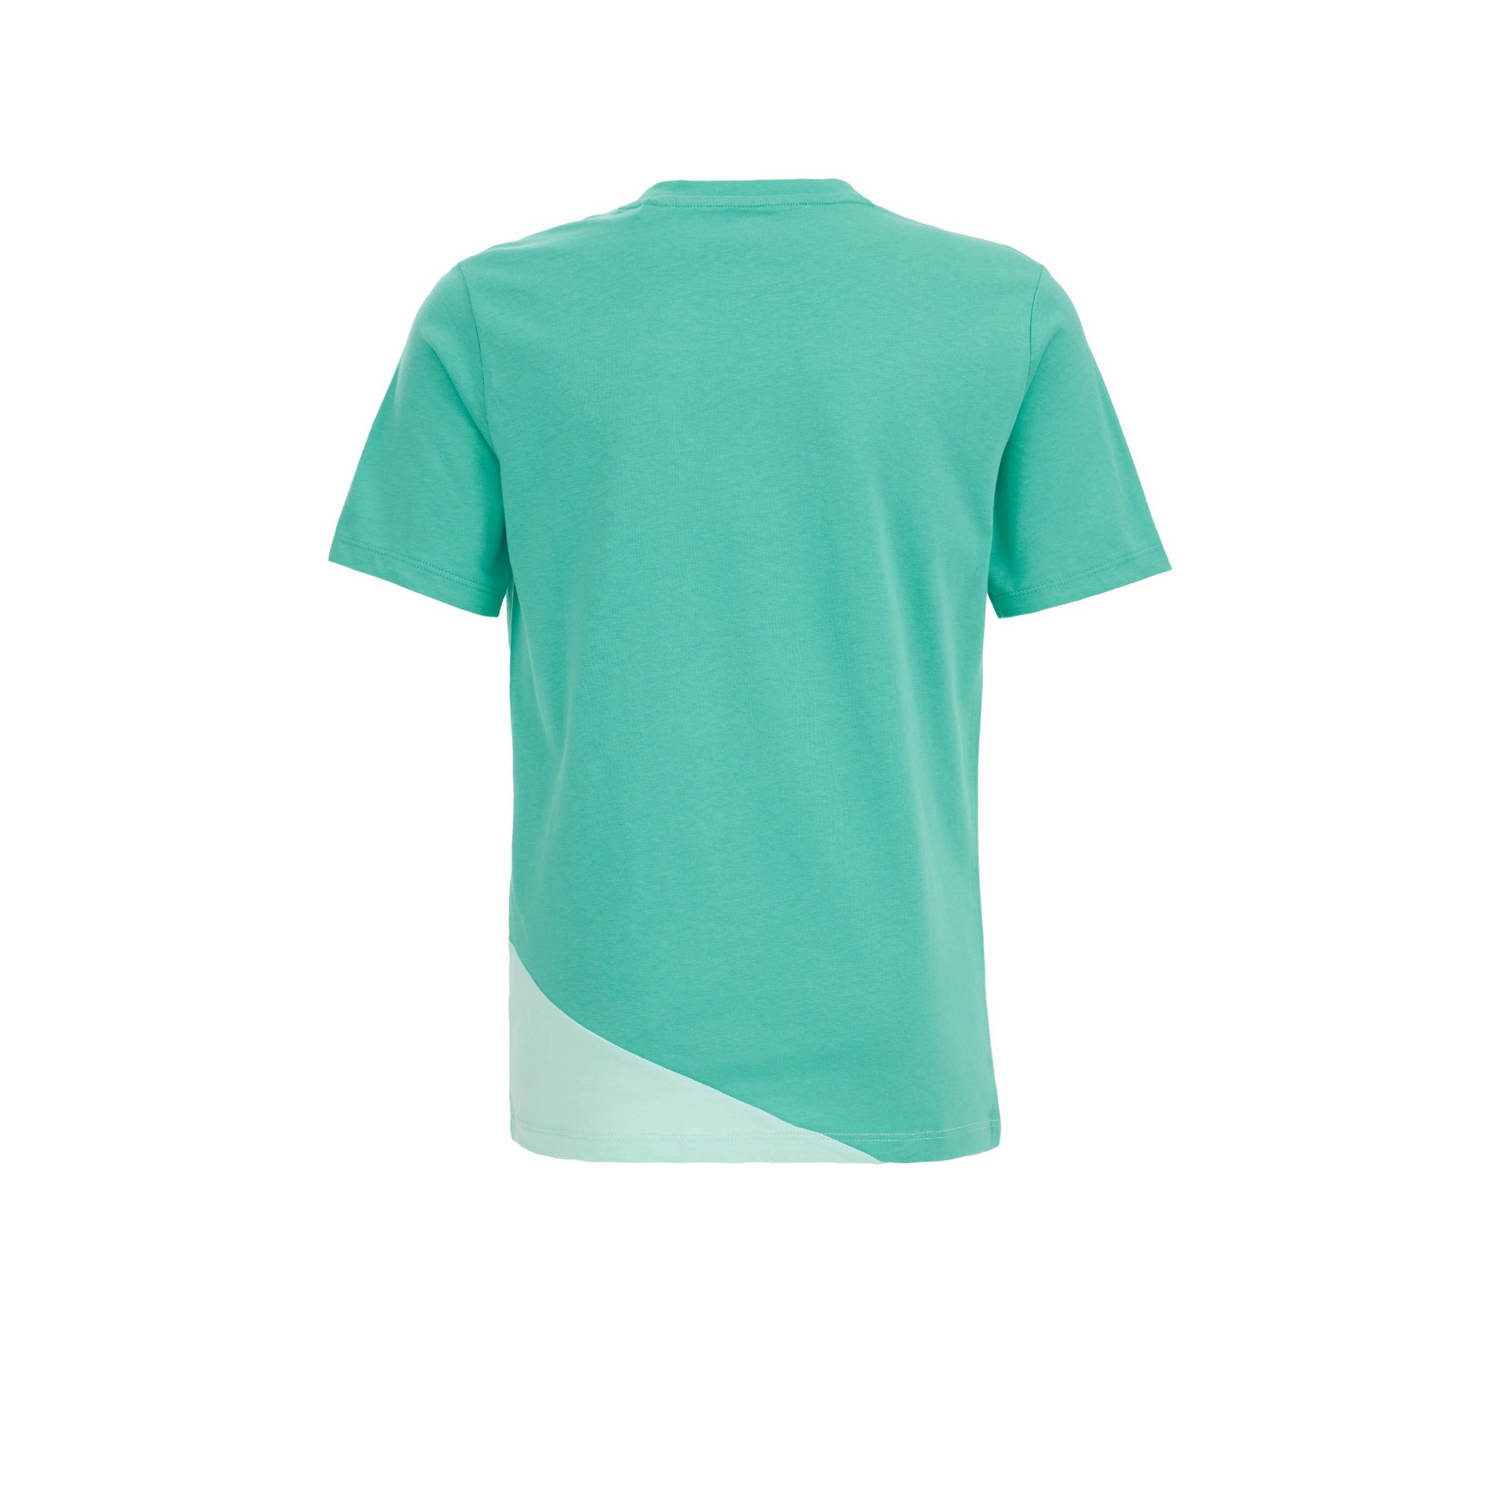 WE Fashion T-shirt turquoise lichtblauw